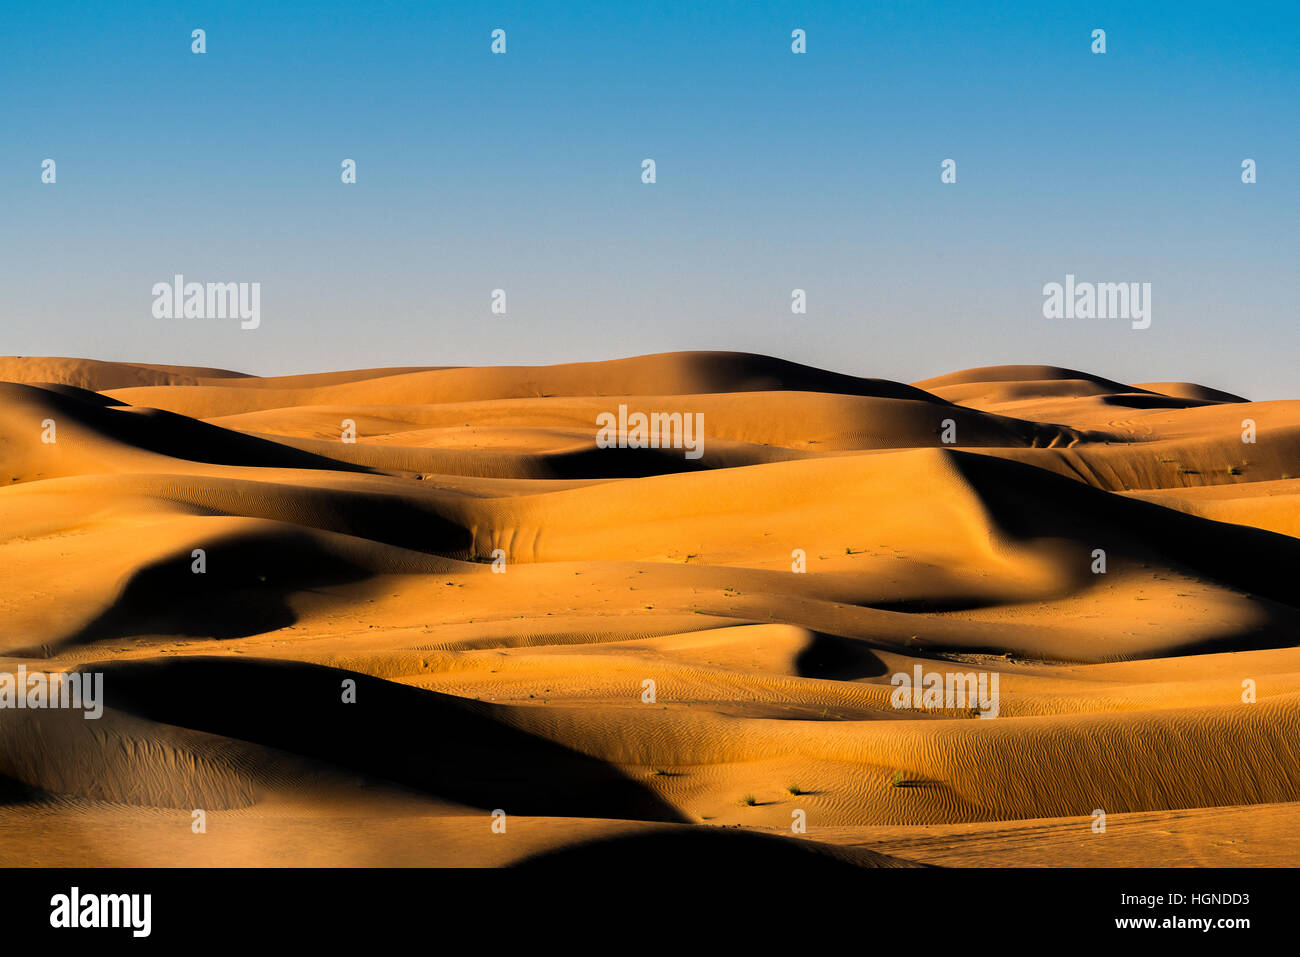 Sunset view of sand dunes in the Rub' al Khali desert, Al Ain, United Arab Emirates Stock Photo